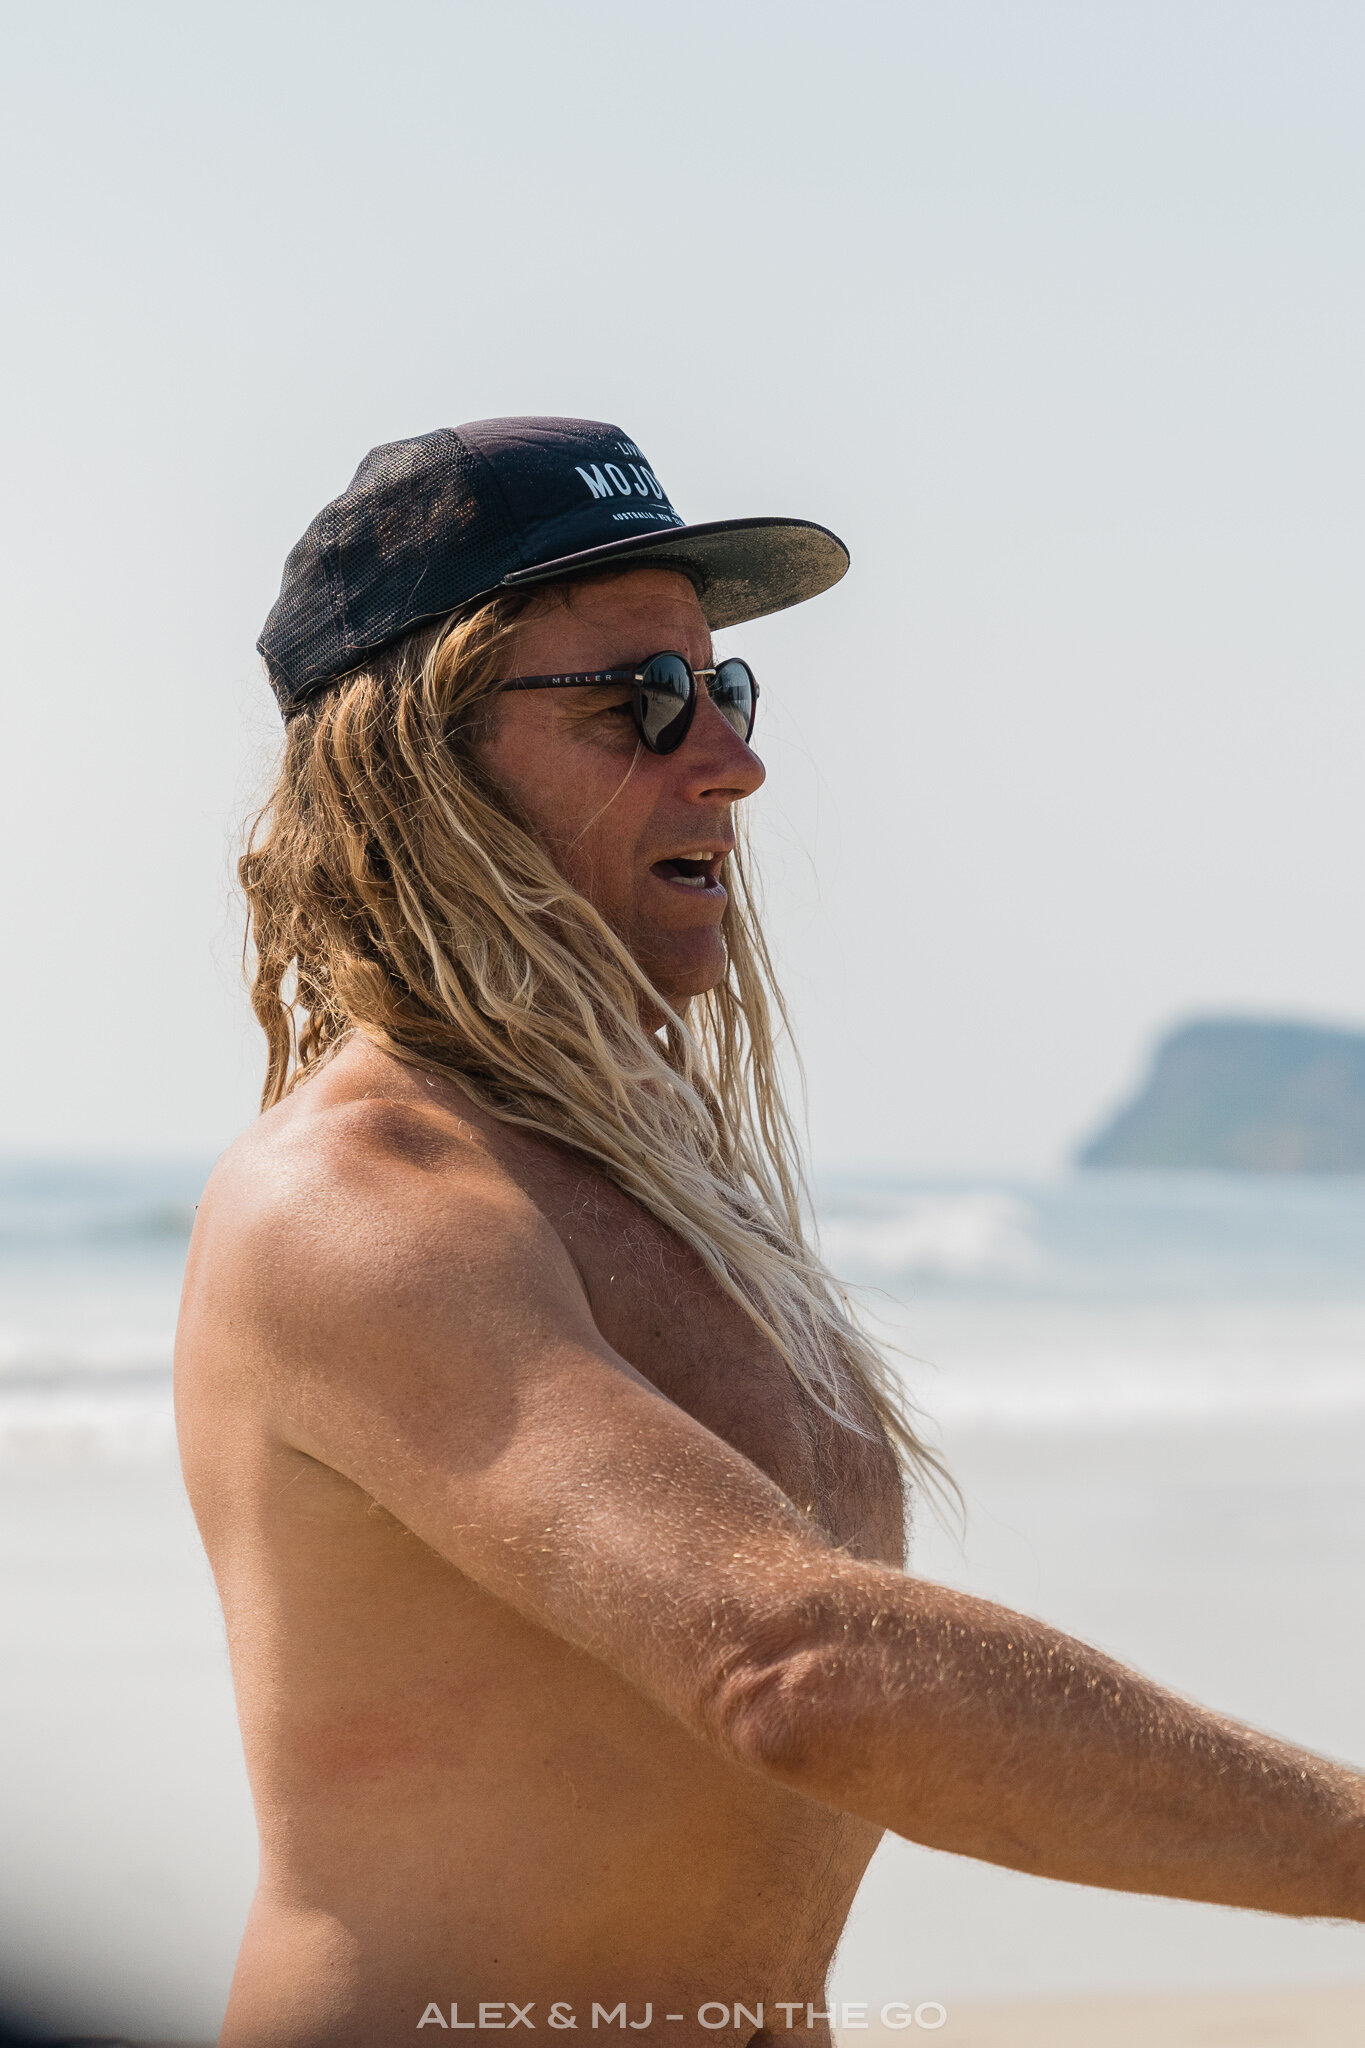 Alex-MJ-On-the-GO-byron-bay-4-activites-surf-instructeur-cheveux-blonds.jpg